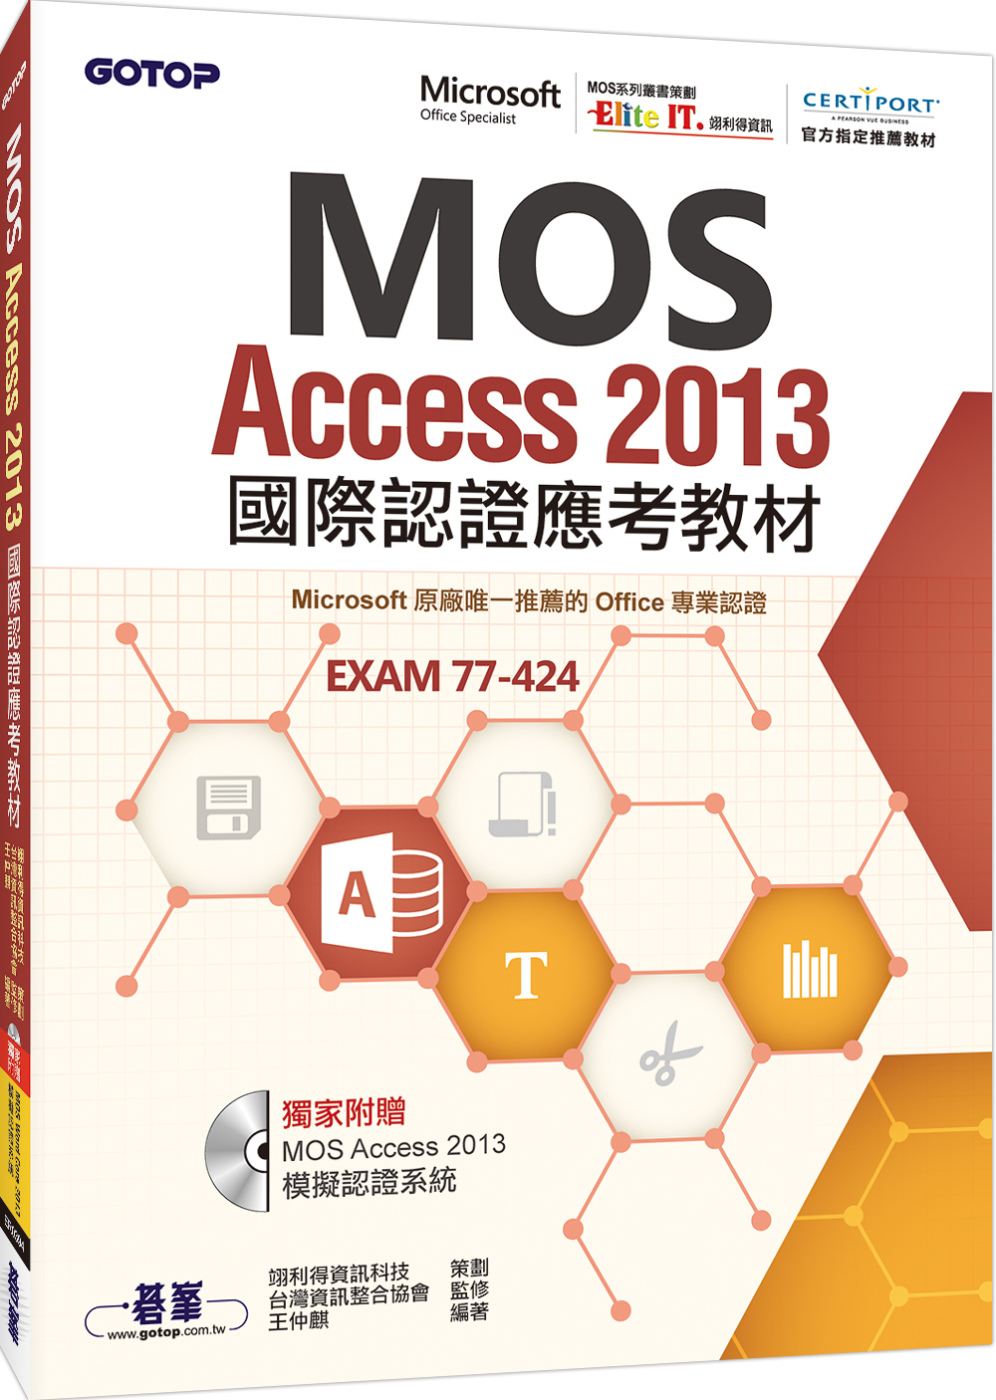 MOS Access 2013國際認證應考教材(官方授權教材/附贈模擬認證系統)